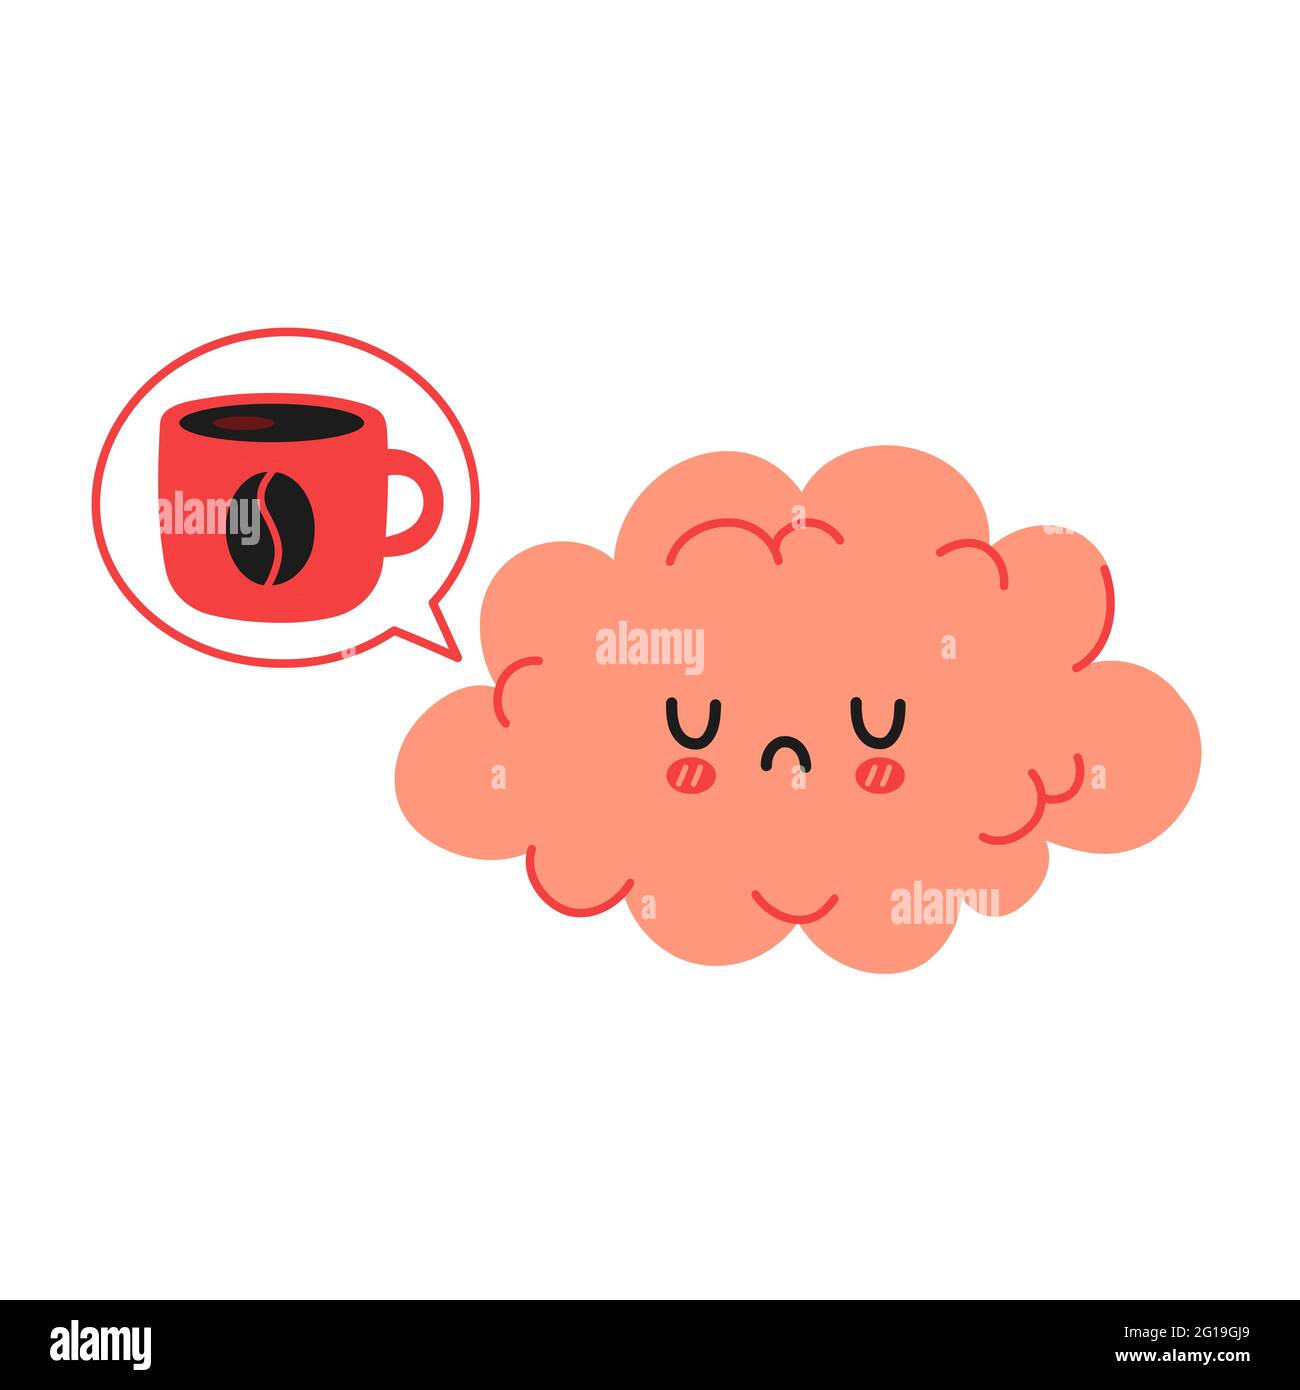 Cute funny sad brain want coffee. Vector hand drawn cartoon kawaii character illustration icon. Isolated on white background. Coffee or tea cup, mug, brain organ character concept Stock Vector